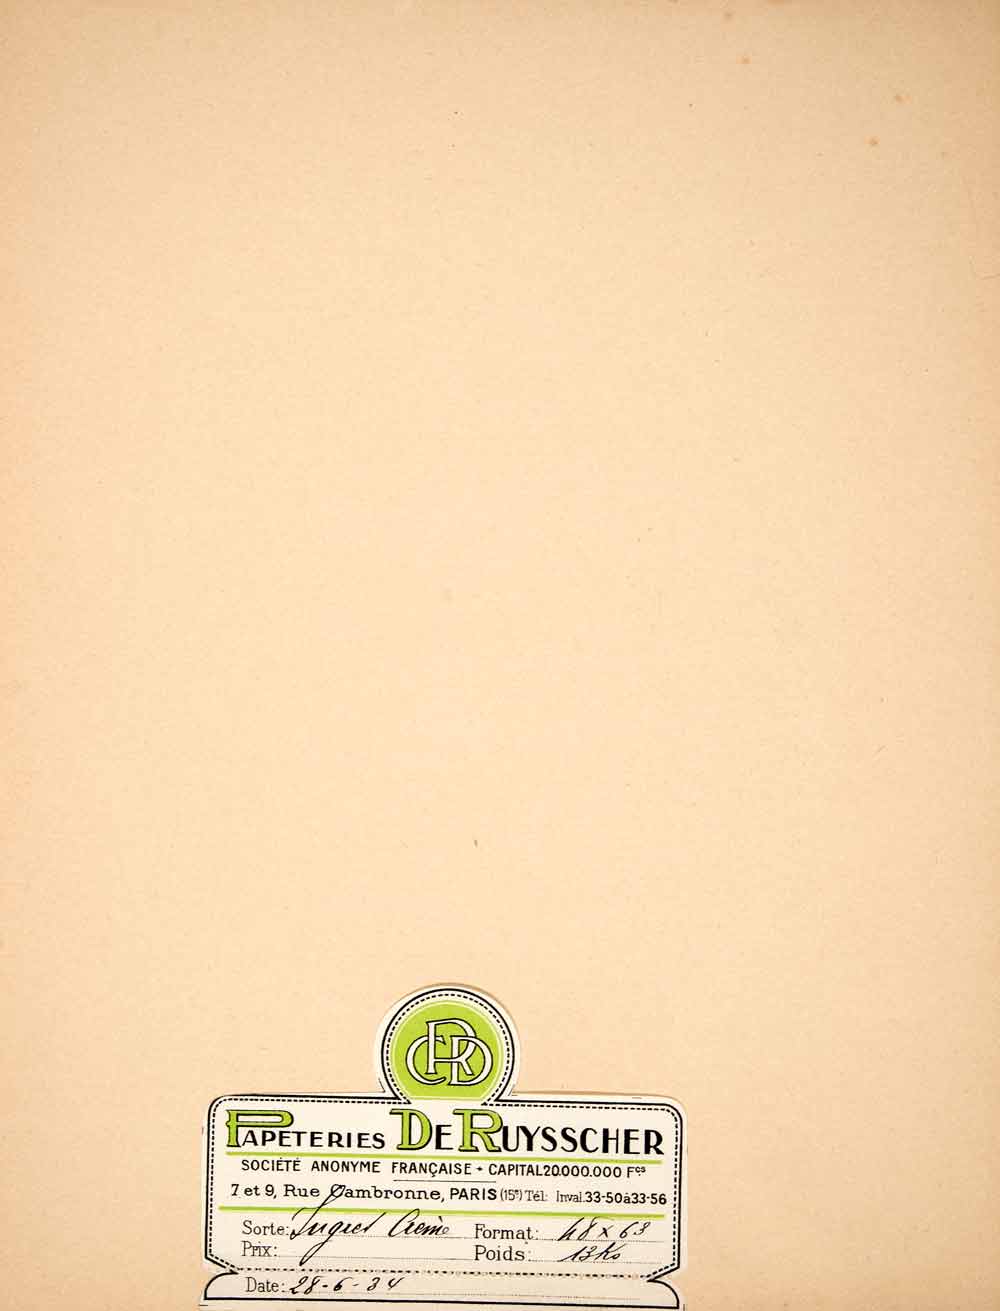 1937 Lithograph Ad Paper Stock Paperteries De Ruysscher 9 Rue Cambronne VENA2